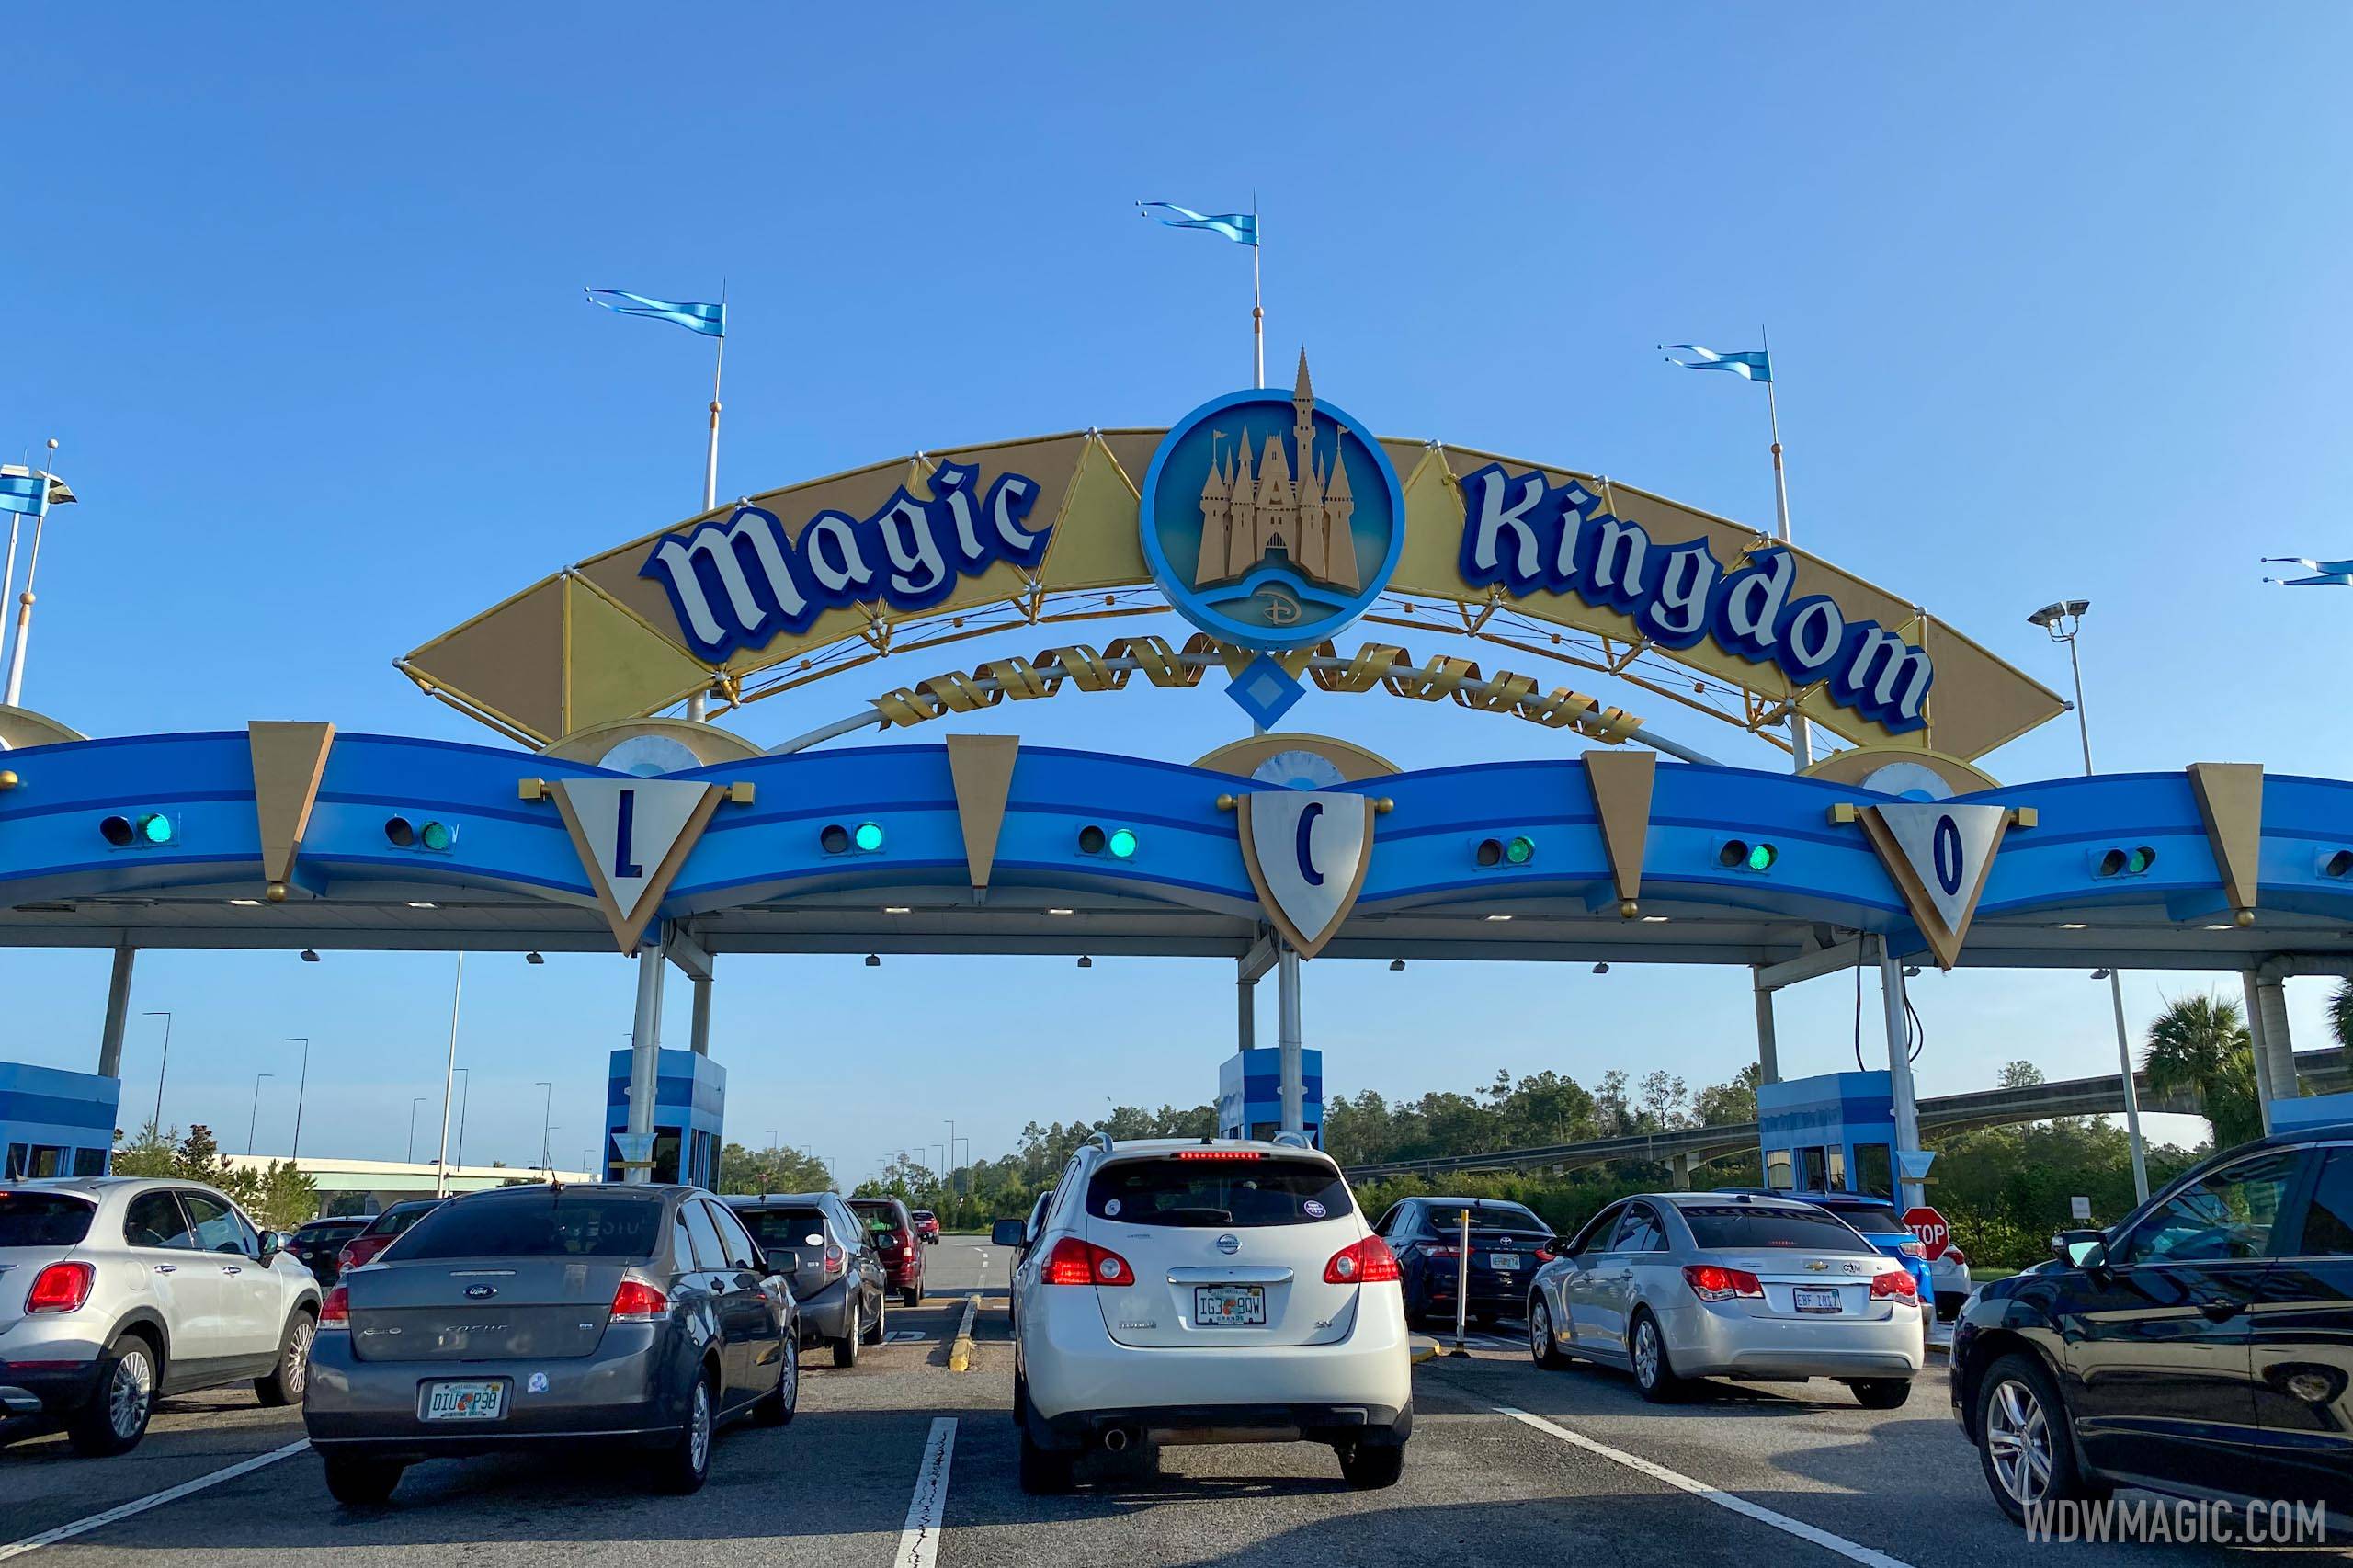 Magic Kingdom reopening from COVID-19 closure